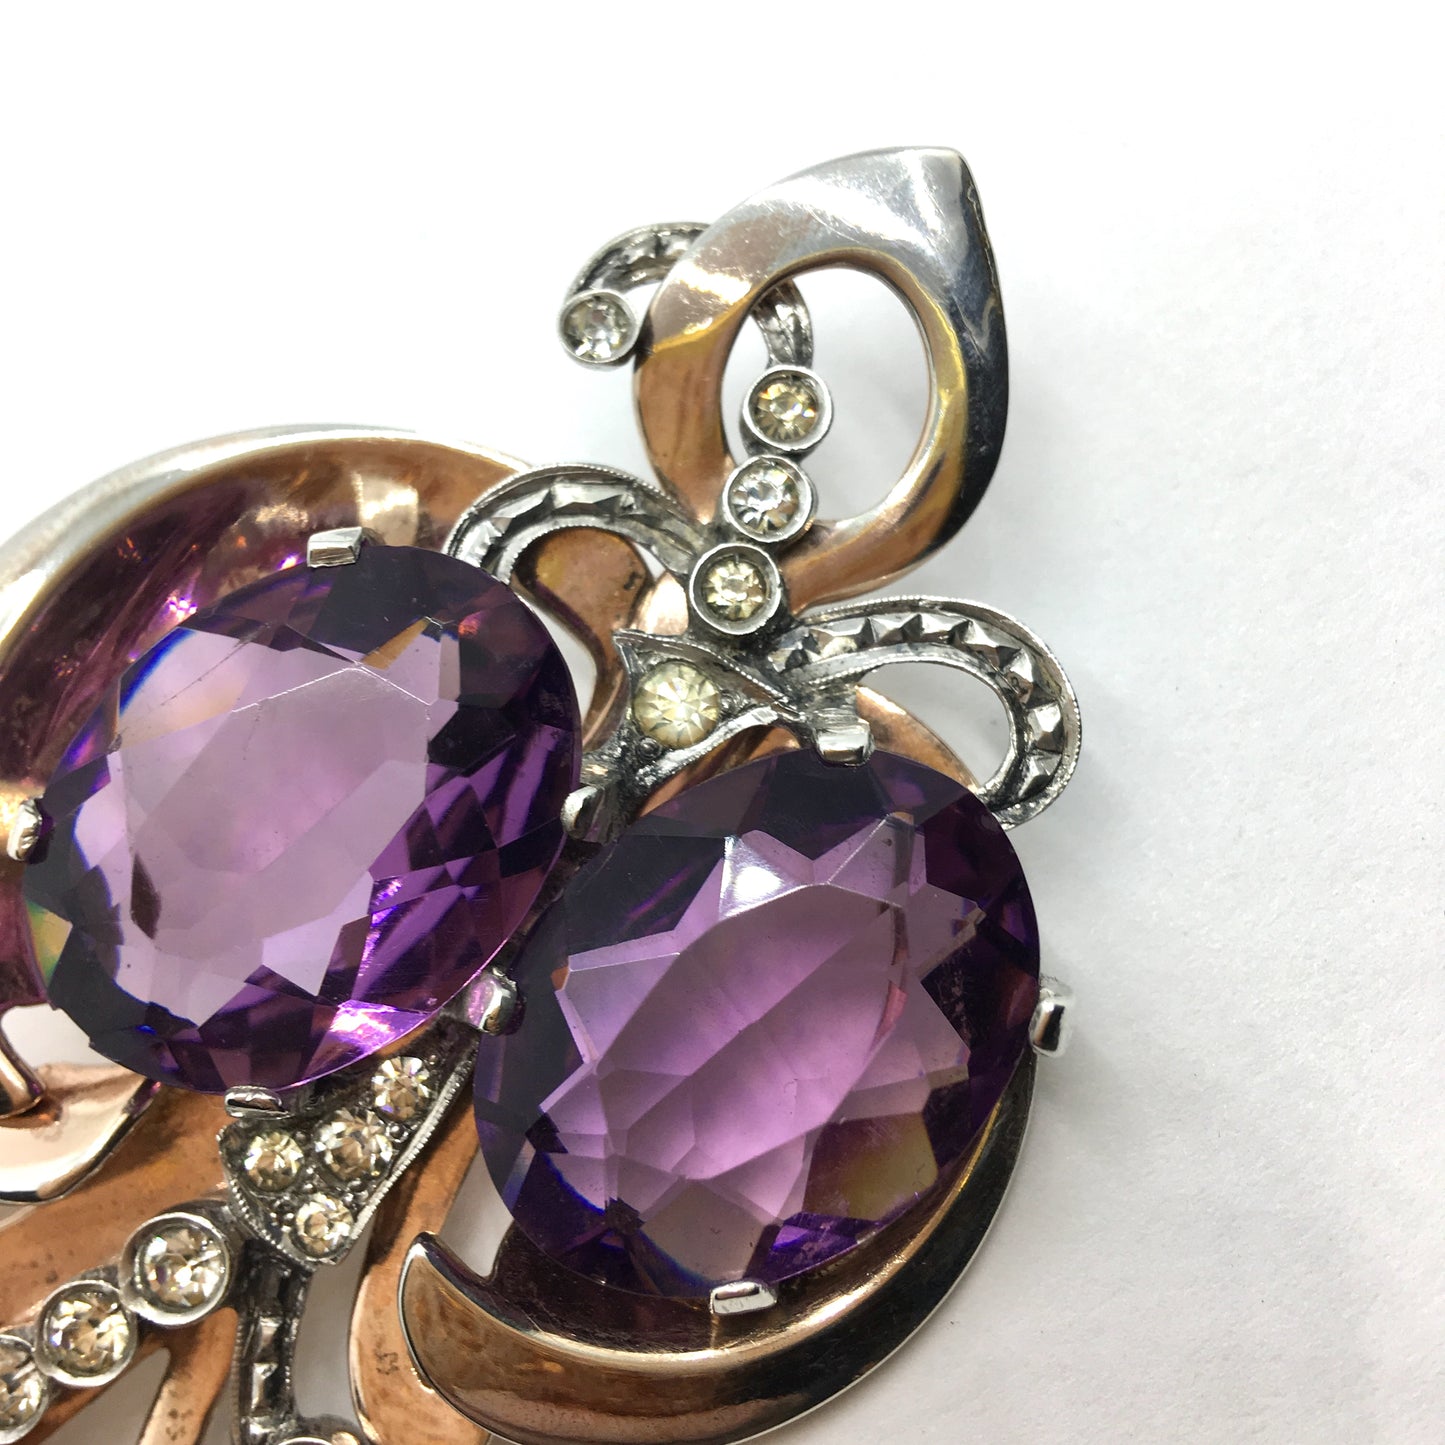 Brooch / Lapel Pin - Large Vintage Sterling Silver Scrolling Design Purple Stone Brooch Lapel Pin